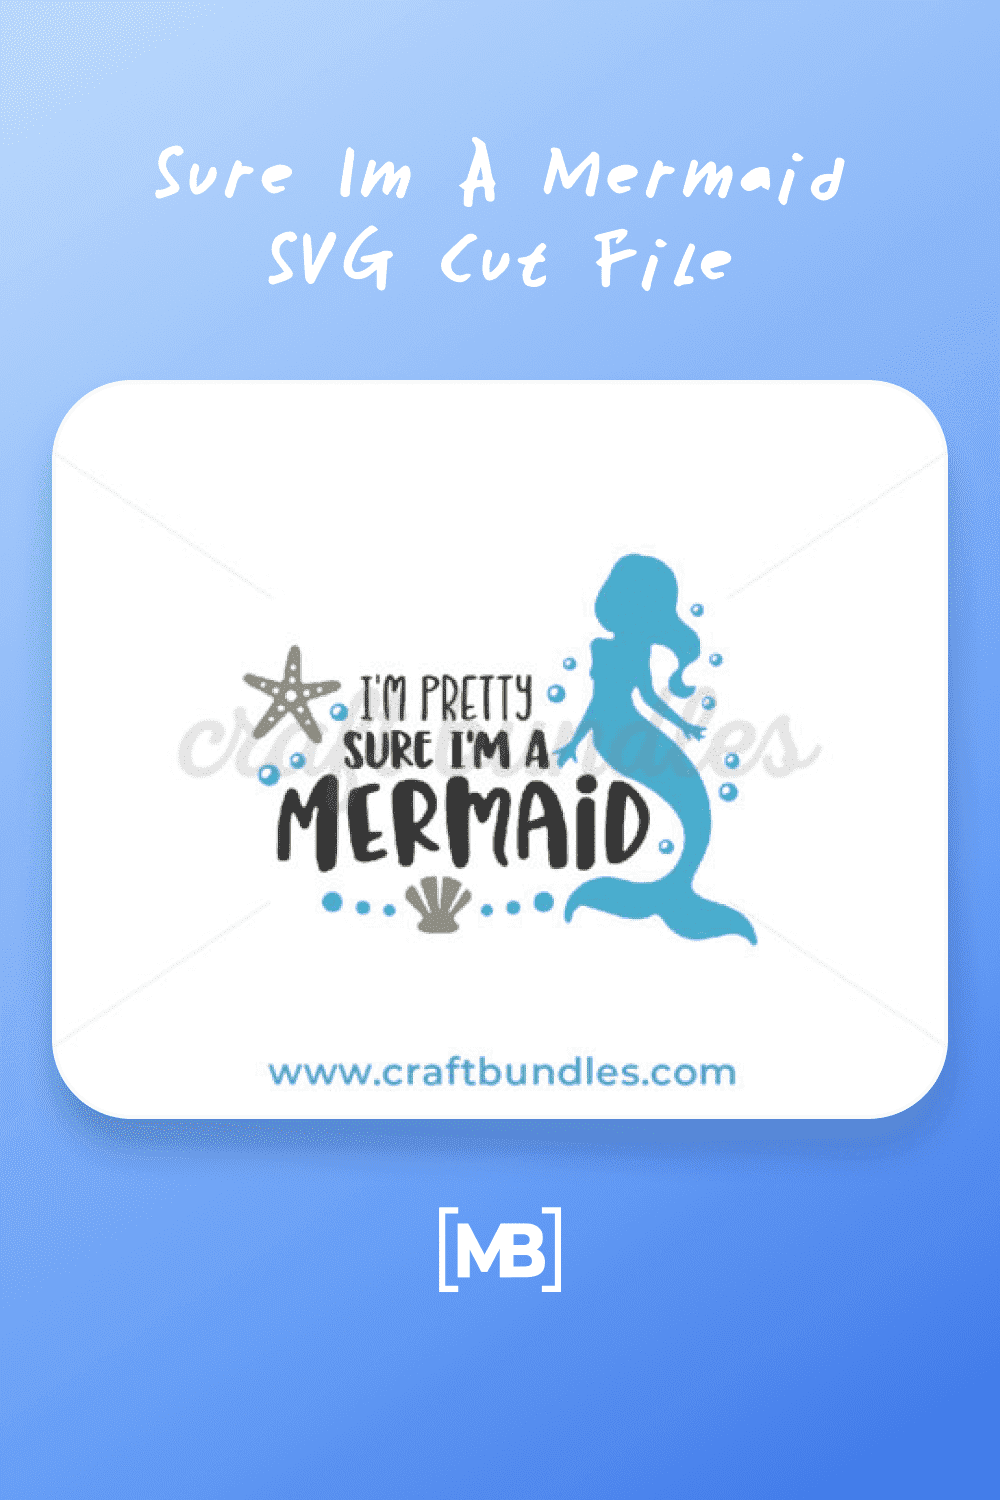 Sure Im A Mermaid SVG Cut File.